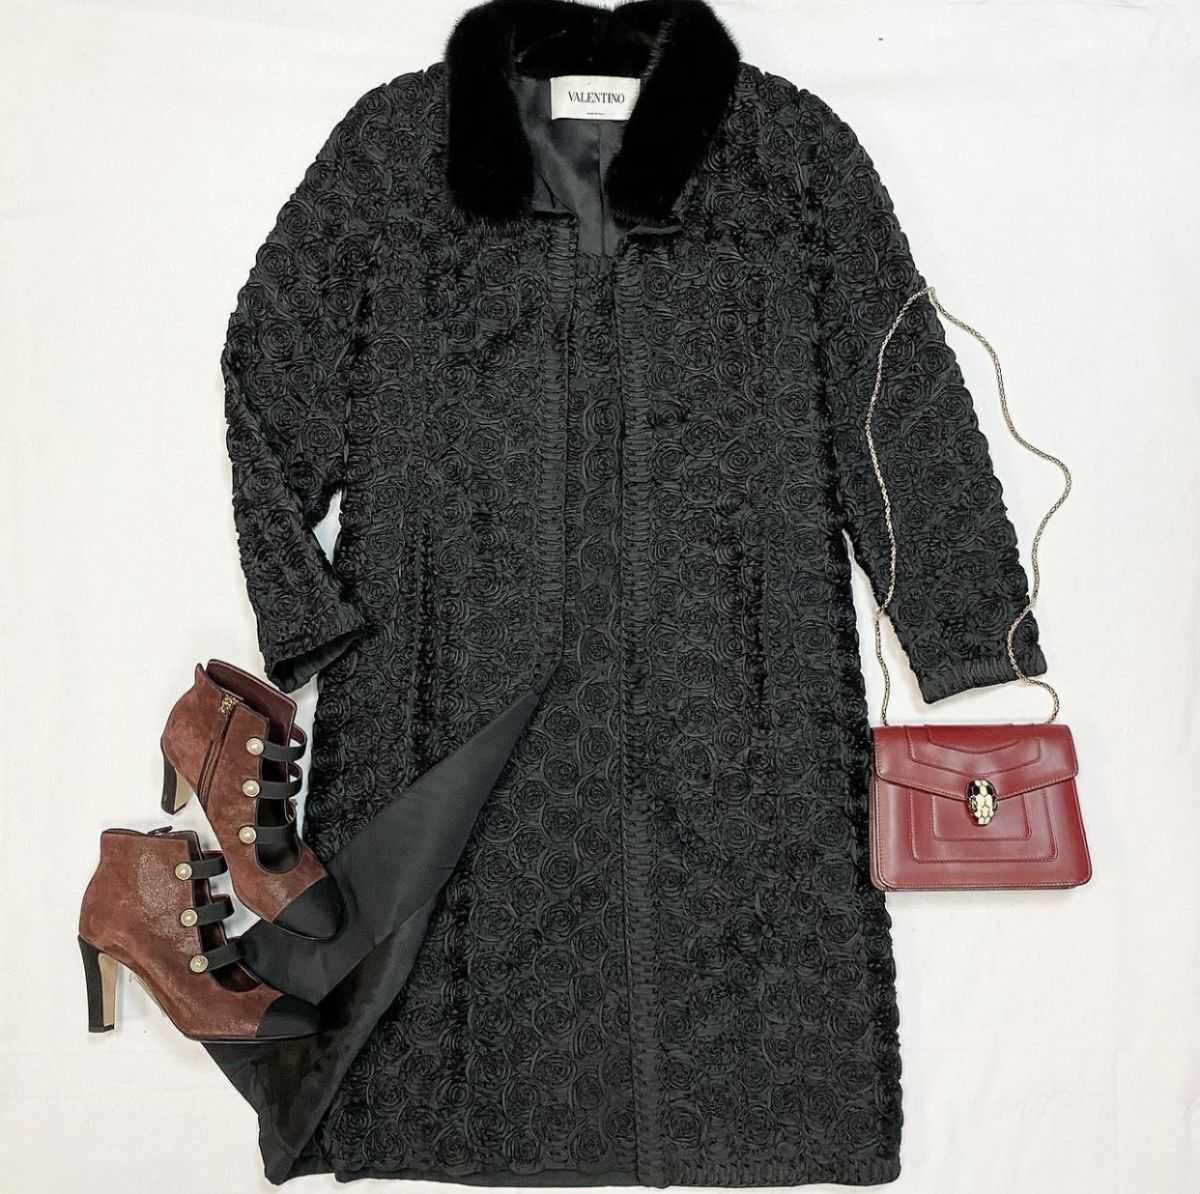 Двойка / пальто + платье / отделка норка / Valentino размер 12 цена 61 540 рубБотильоны Chanel размер 38 цена 46 155 руб Сумка Bvlgari